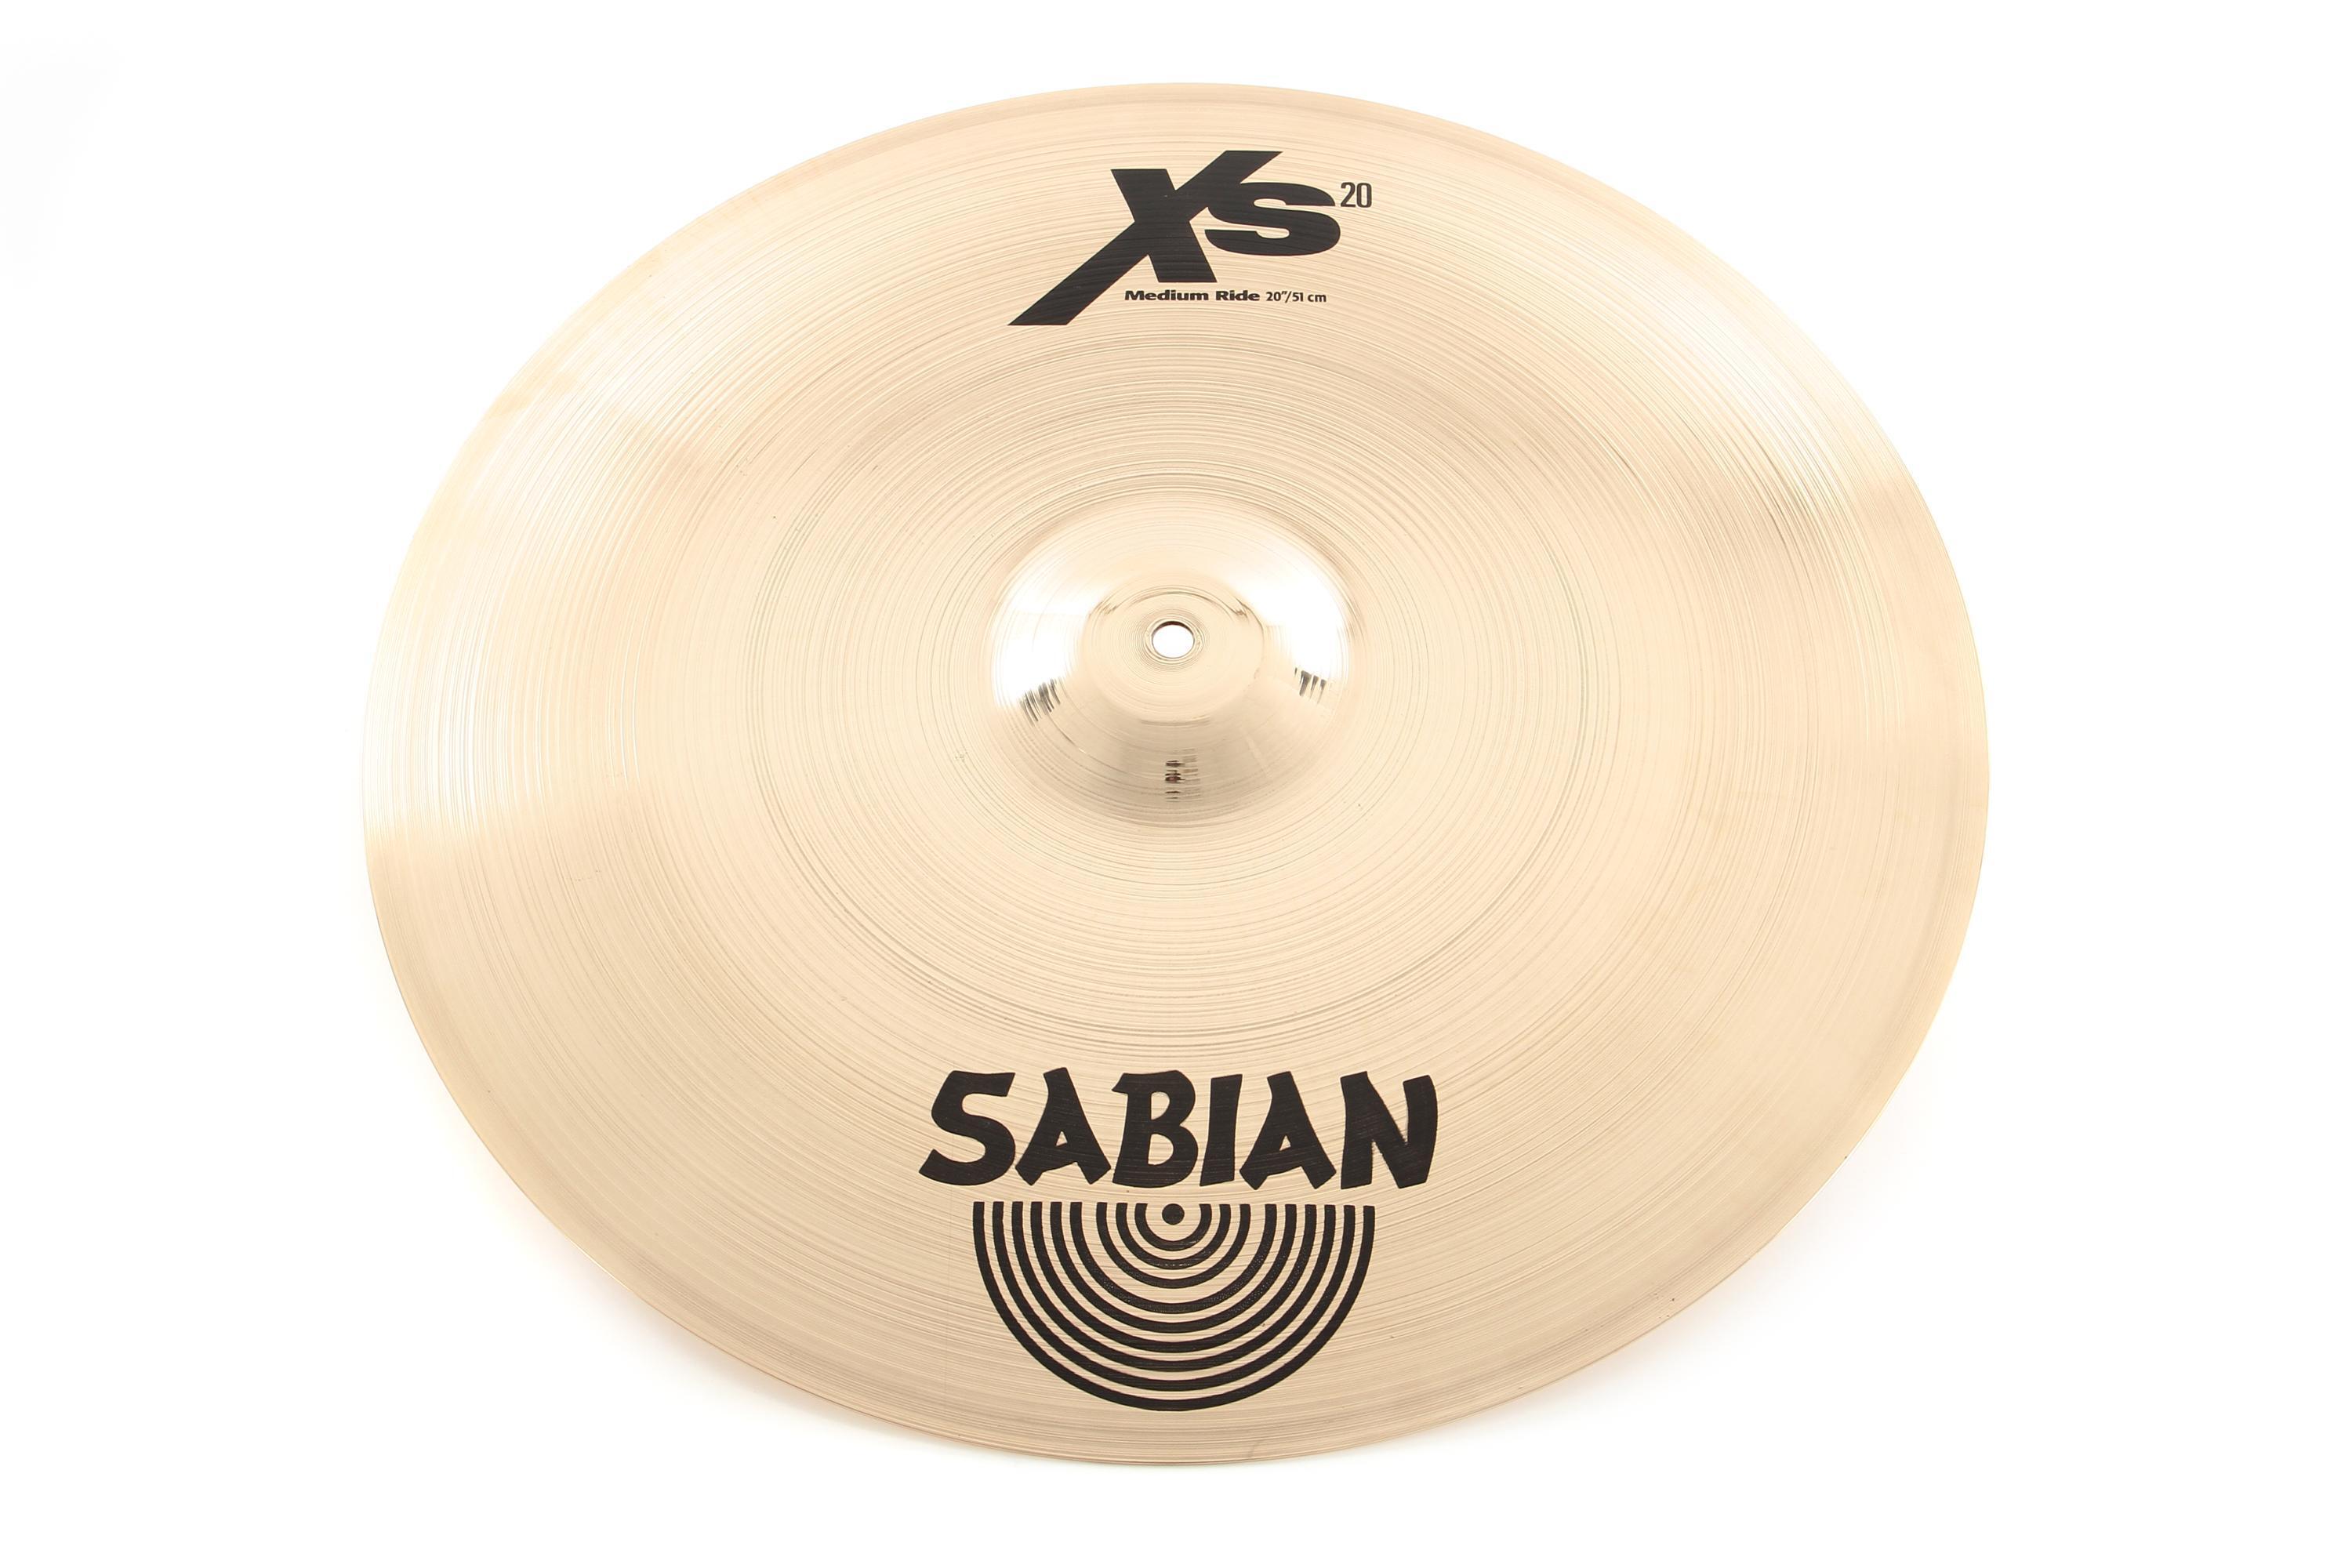 Sabian XS20 Medium Ride - 20